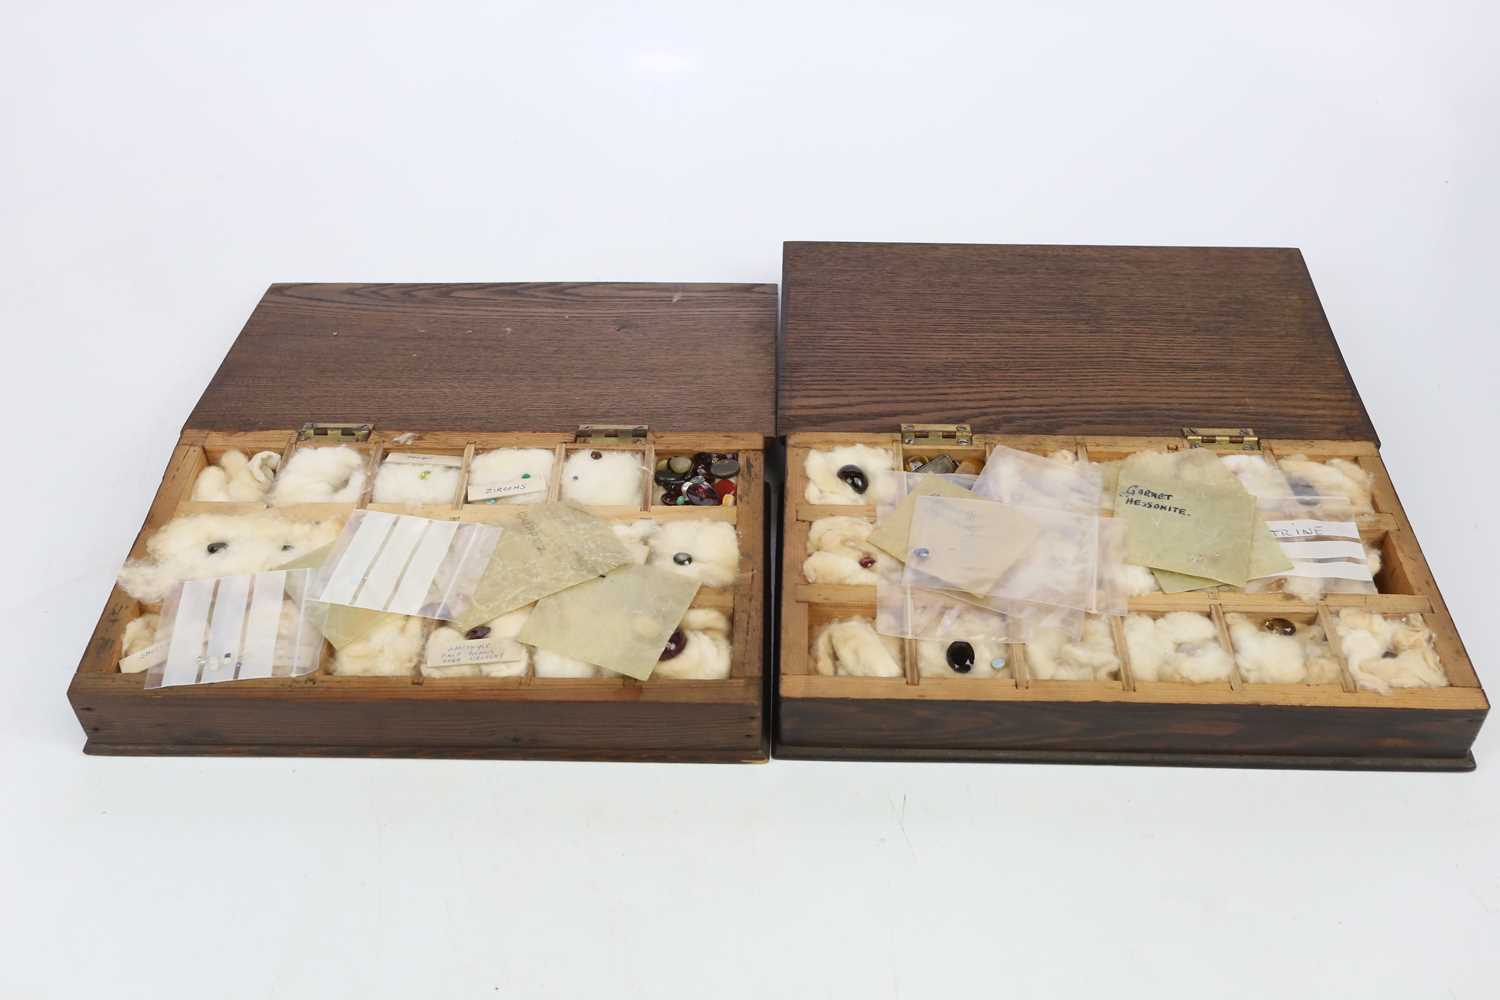 Two cases of gemological samples including peridot, quartz, aquamarine, tiger's eye, etc.